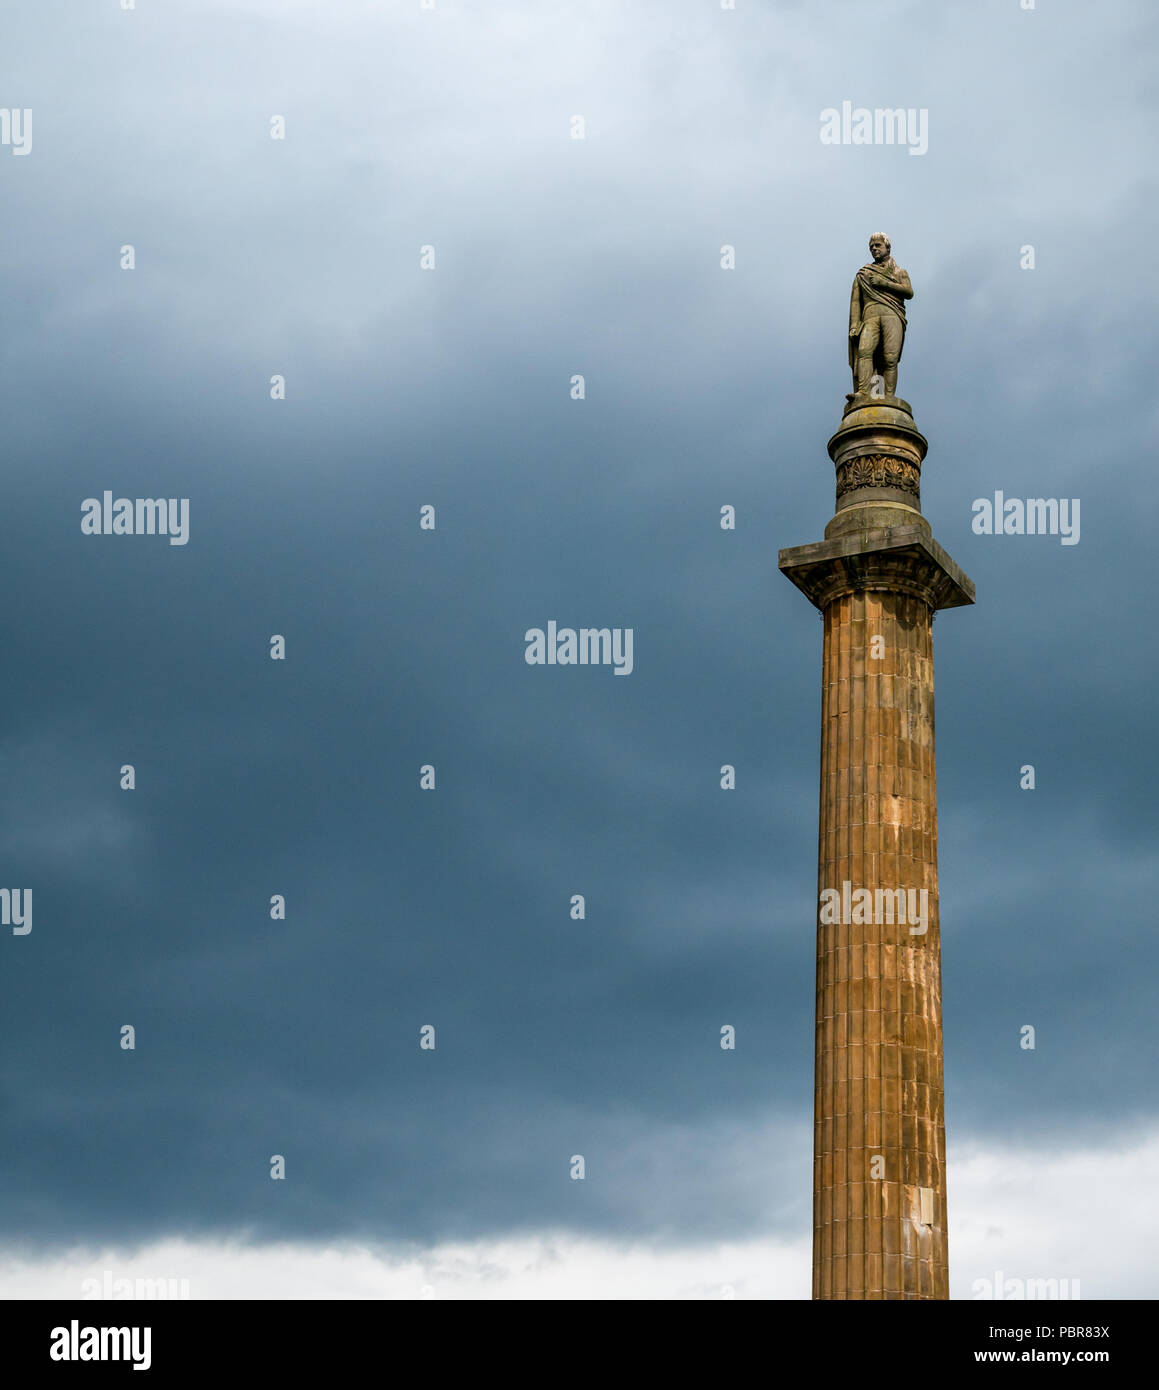 Sir Walter Scott Memorial Column statue and with stormy threatening dark sky, George Square, Glasgow, Scotland, UK Stock Photo